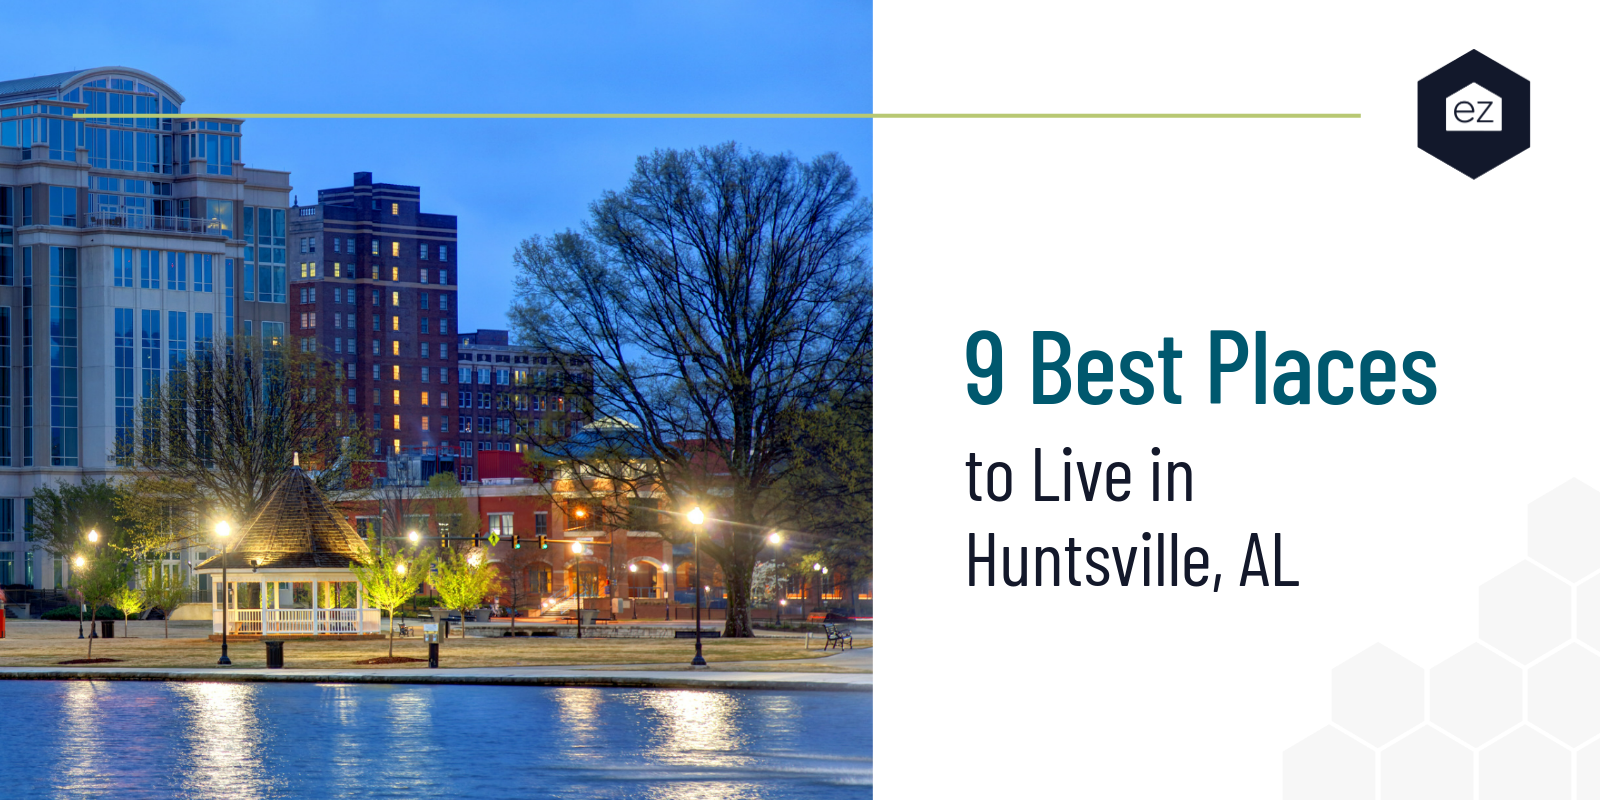 City of Huntsville, Alabama